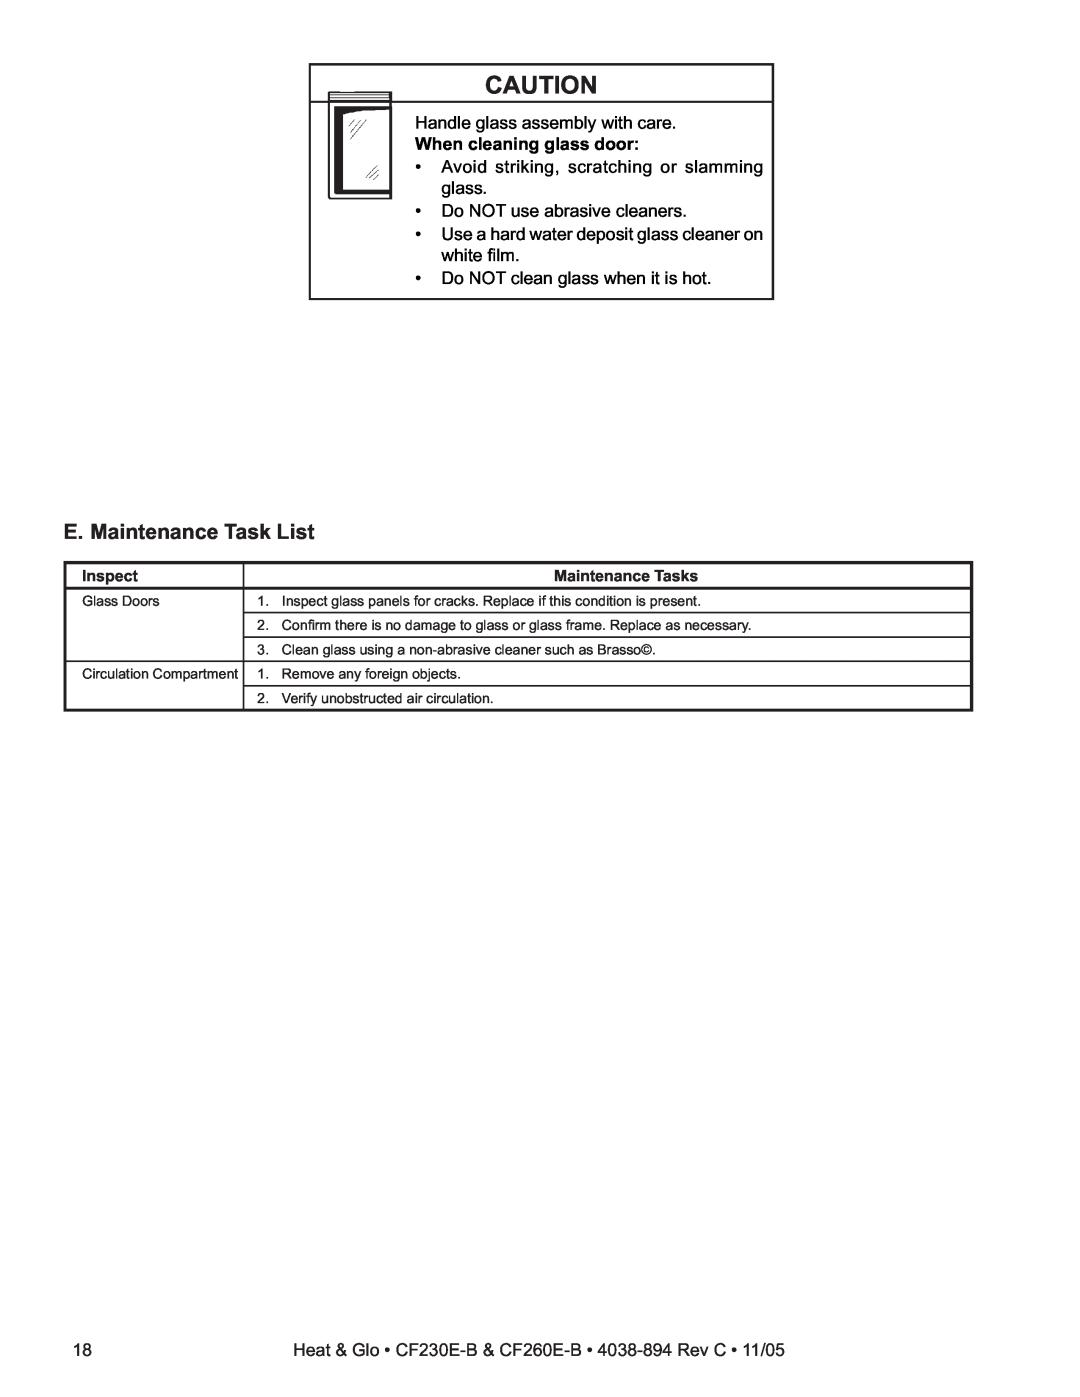 Heat & Glo LifeStyle CF230E-B, CF260E-B owner manual E. Maintenance Task List, When cleaning glass door 